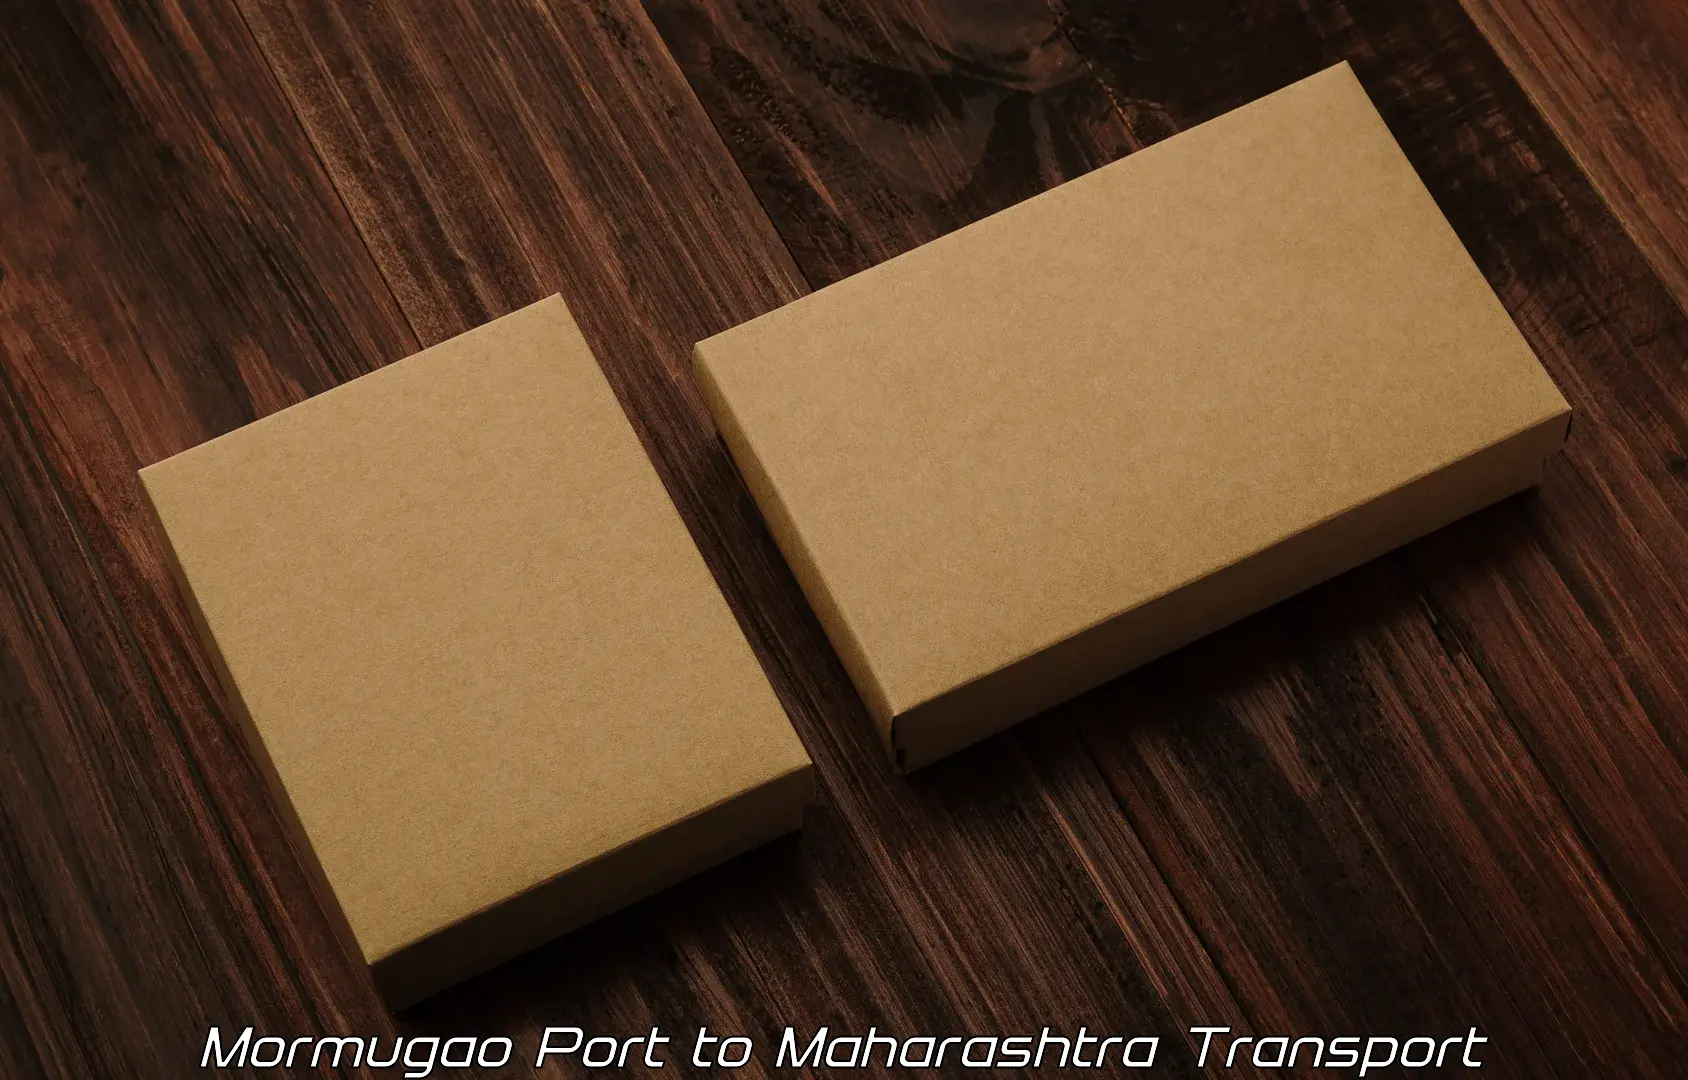 Online transport service Mormugao Port to Mumbai Port